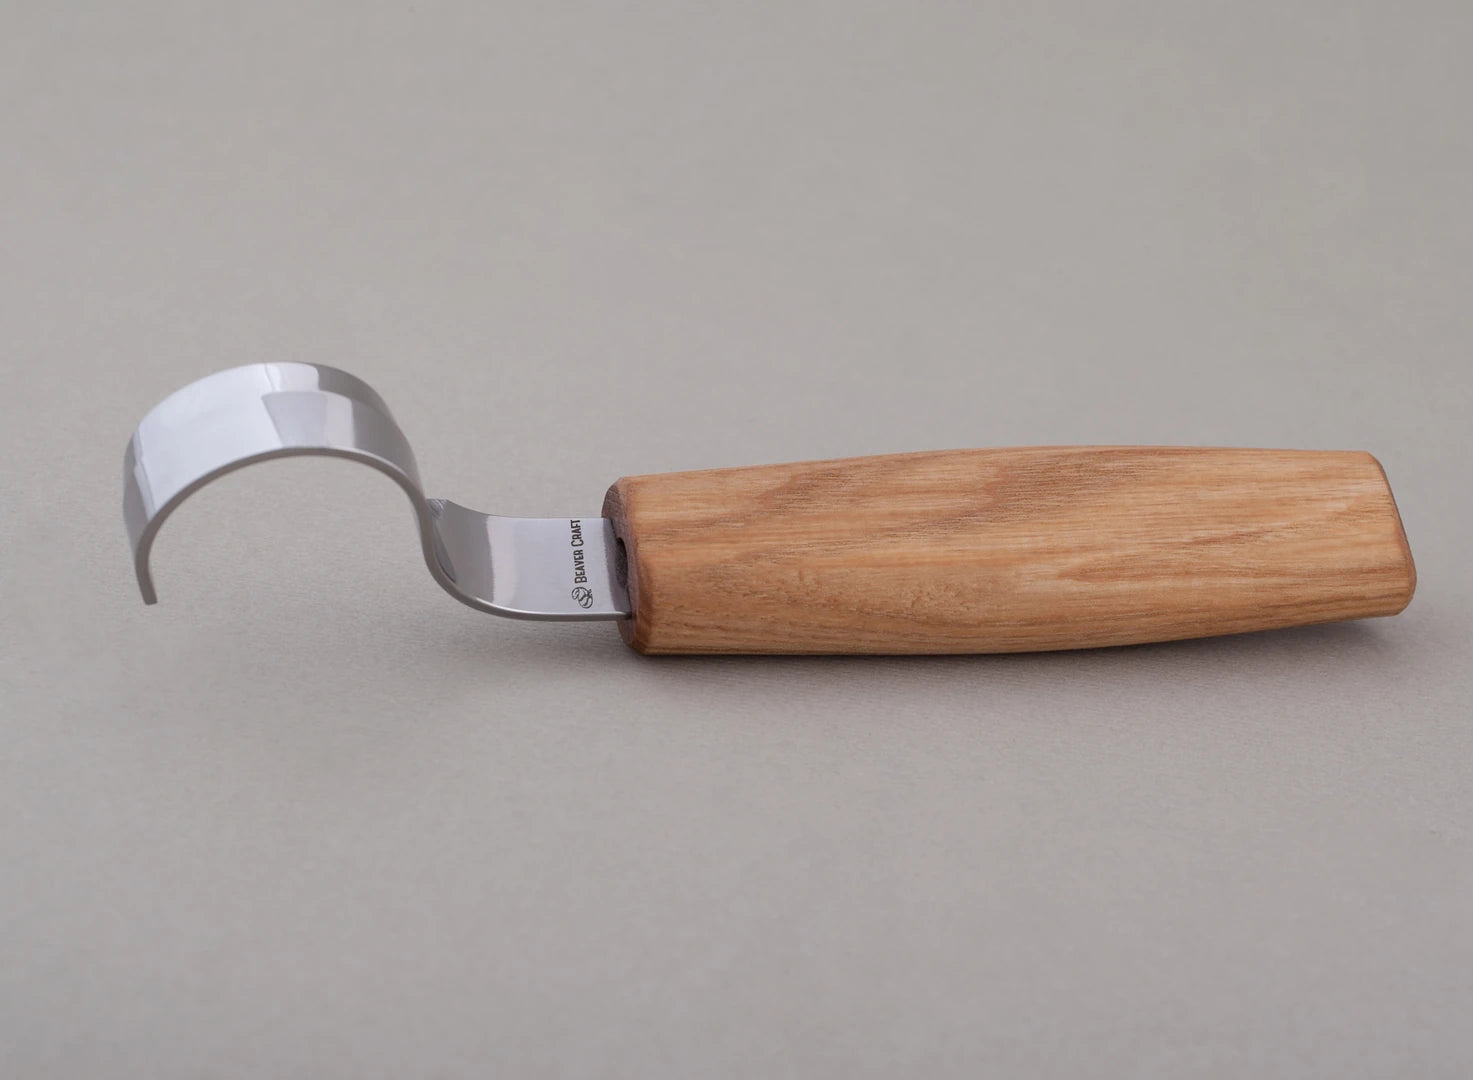 BeaverCraft Small Detail Knife 49-C7